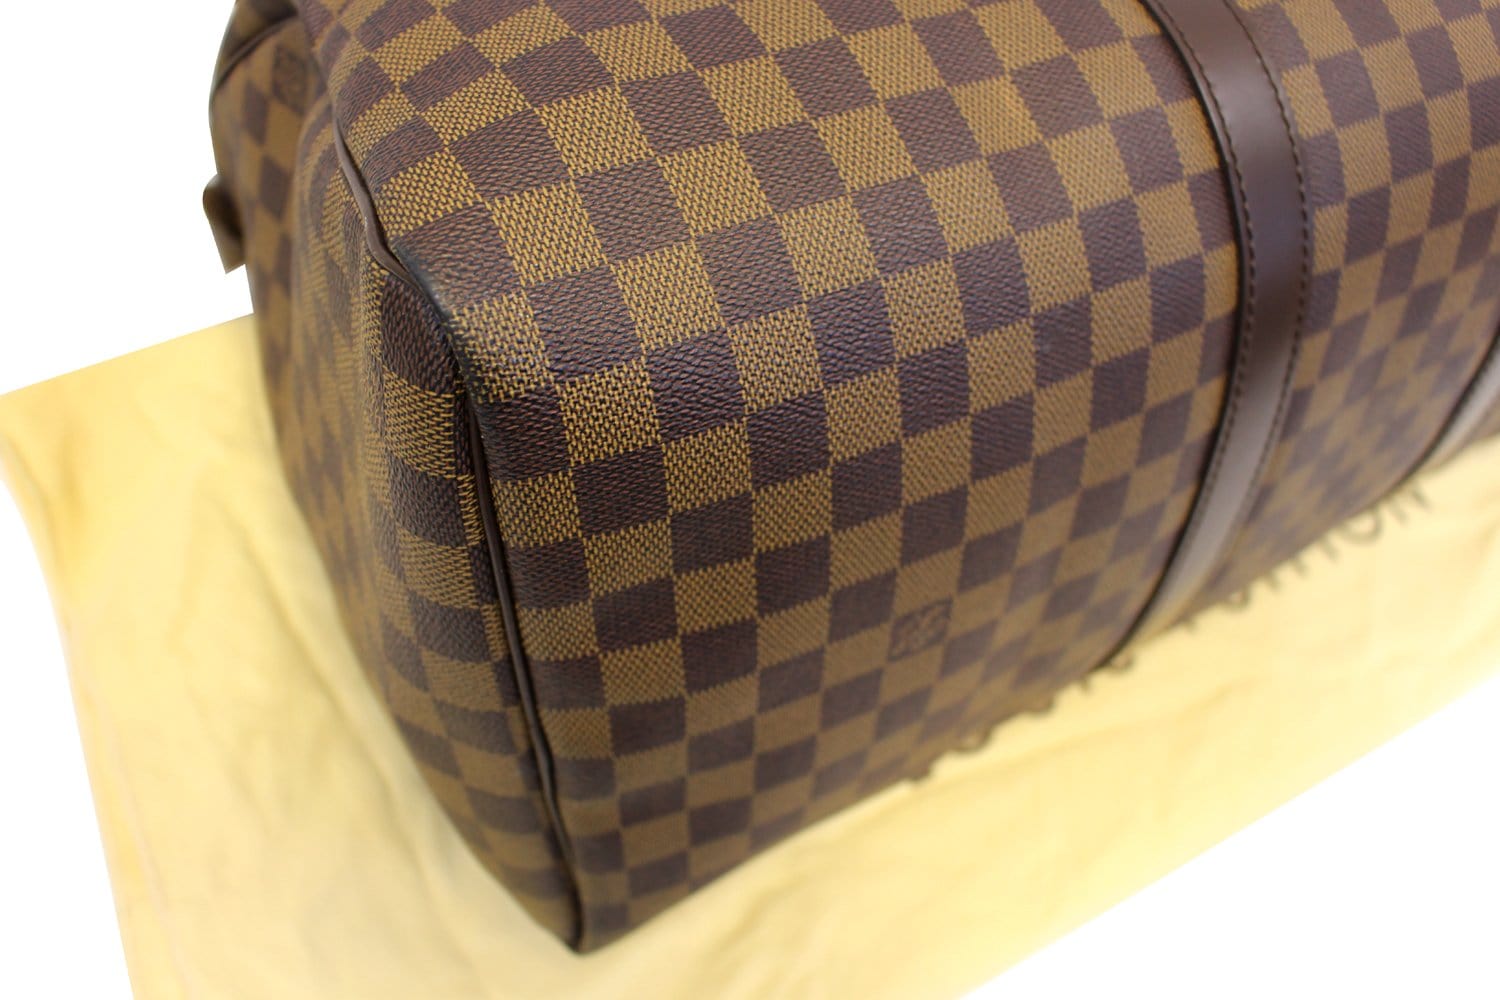 Louis Vuitton Damier Ebene Keepall 50 Duffle Travel Bag 41lk75